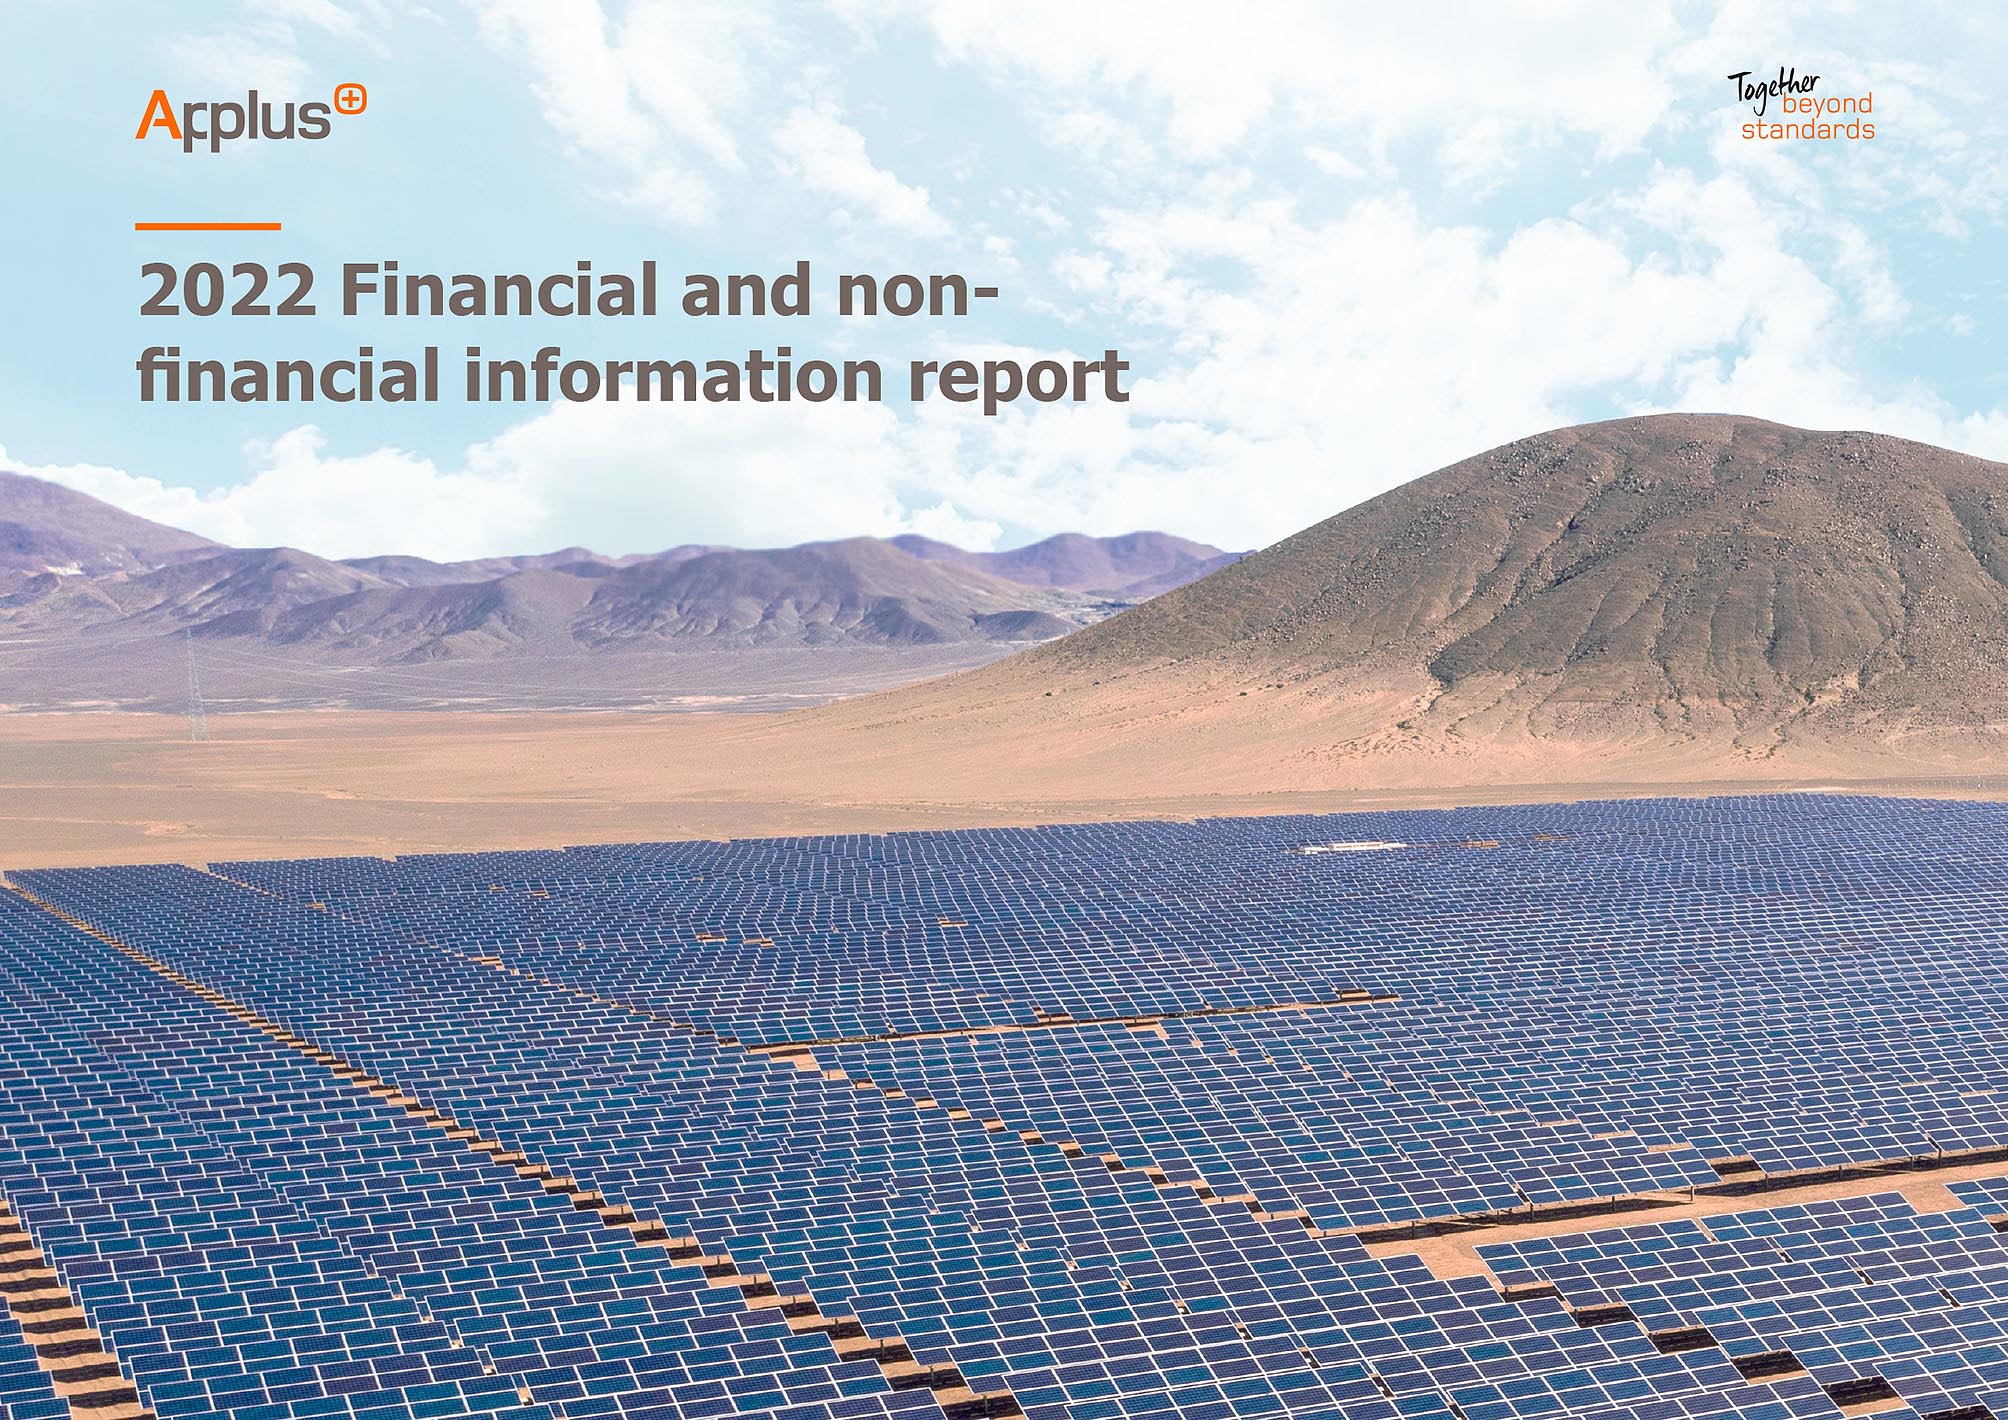 Essential Energy Annual Report 2022-23